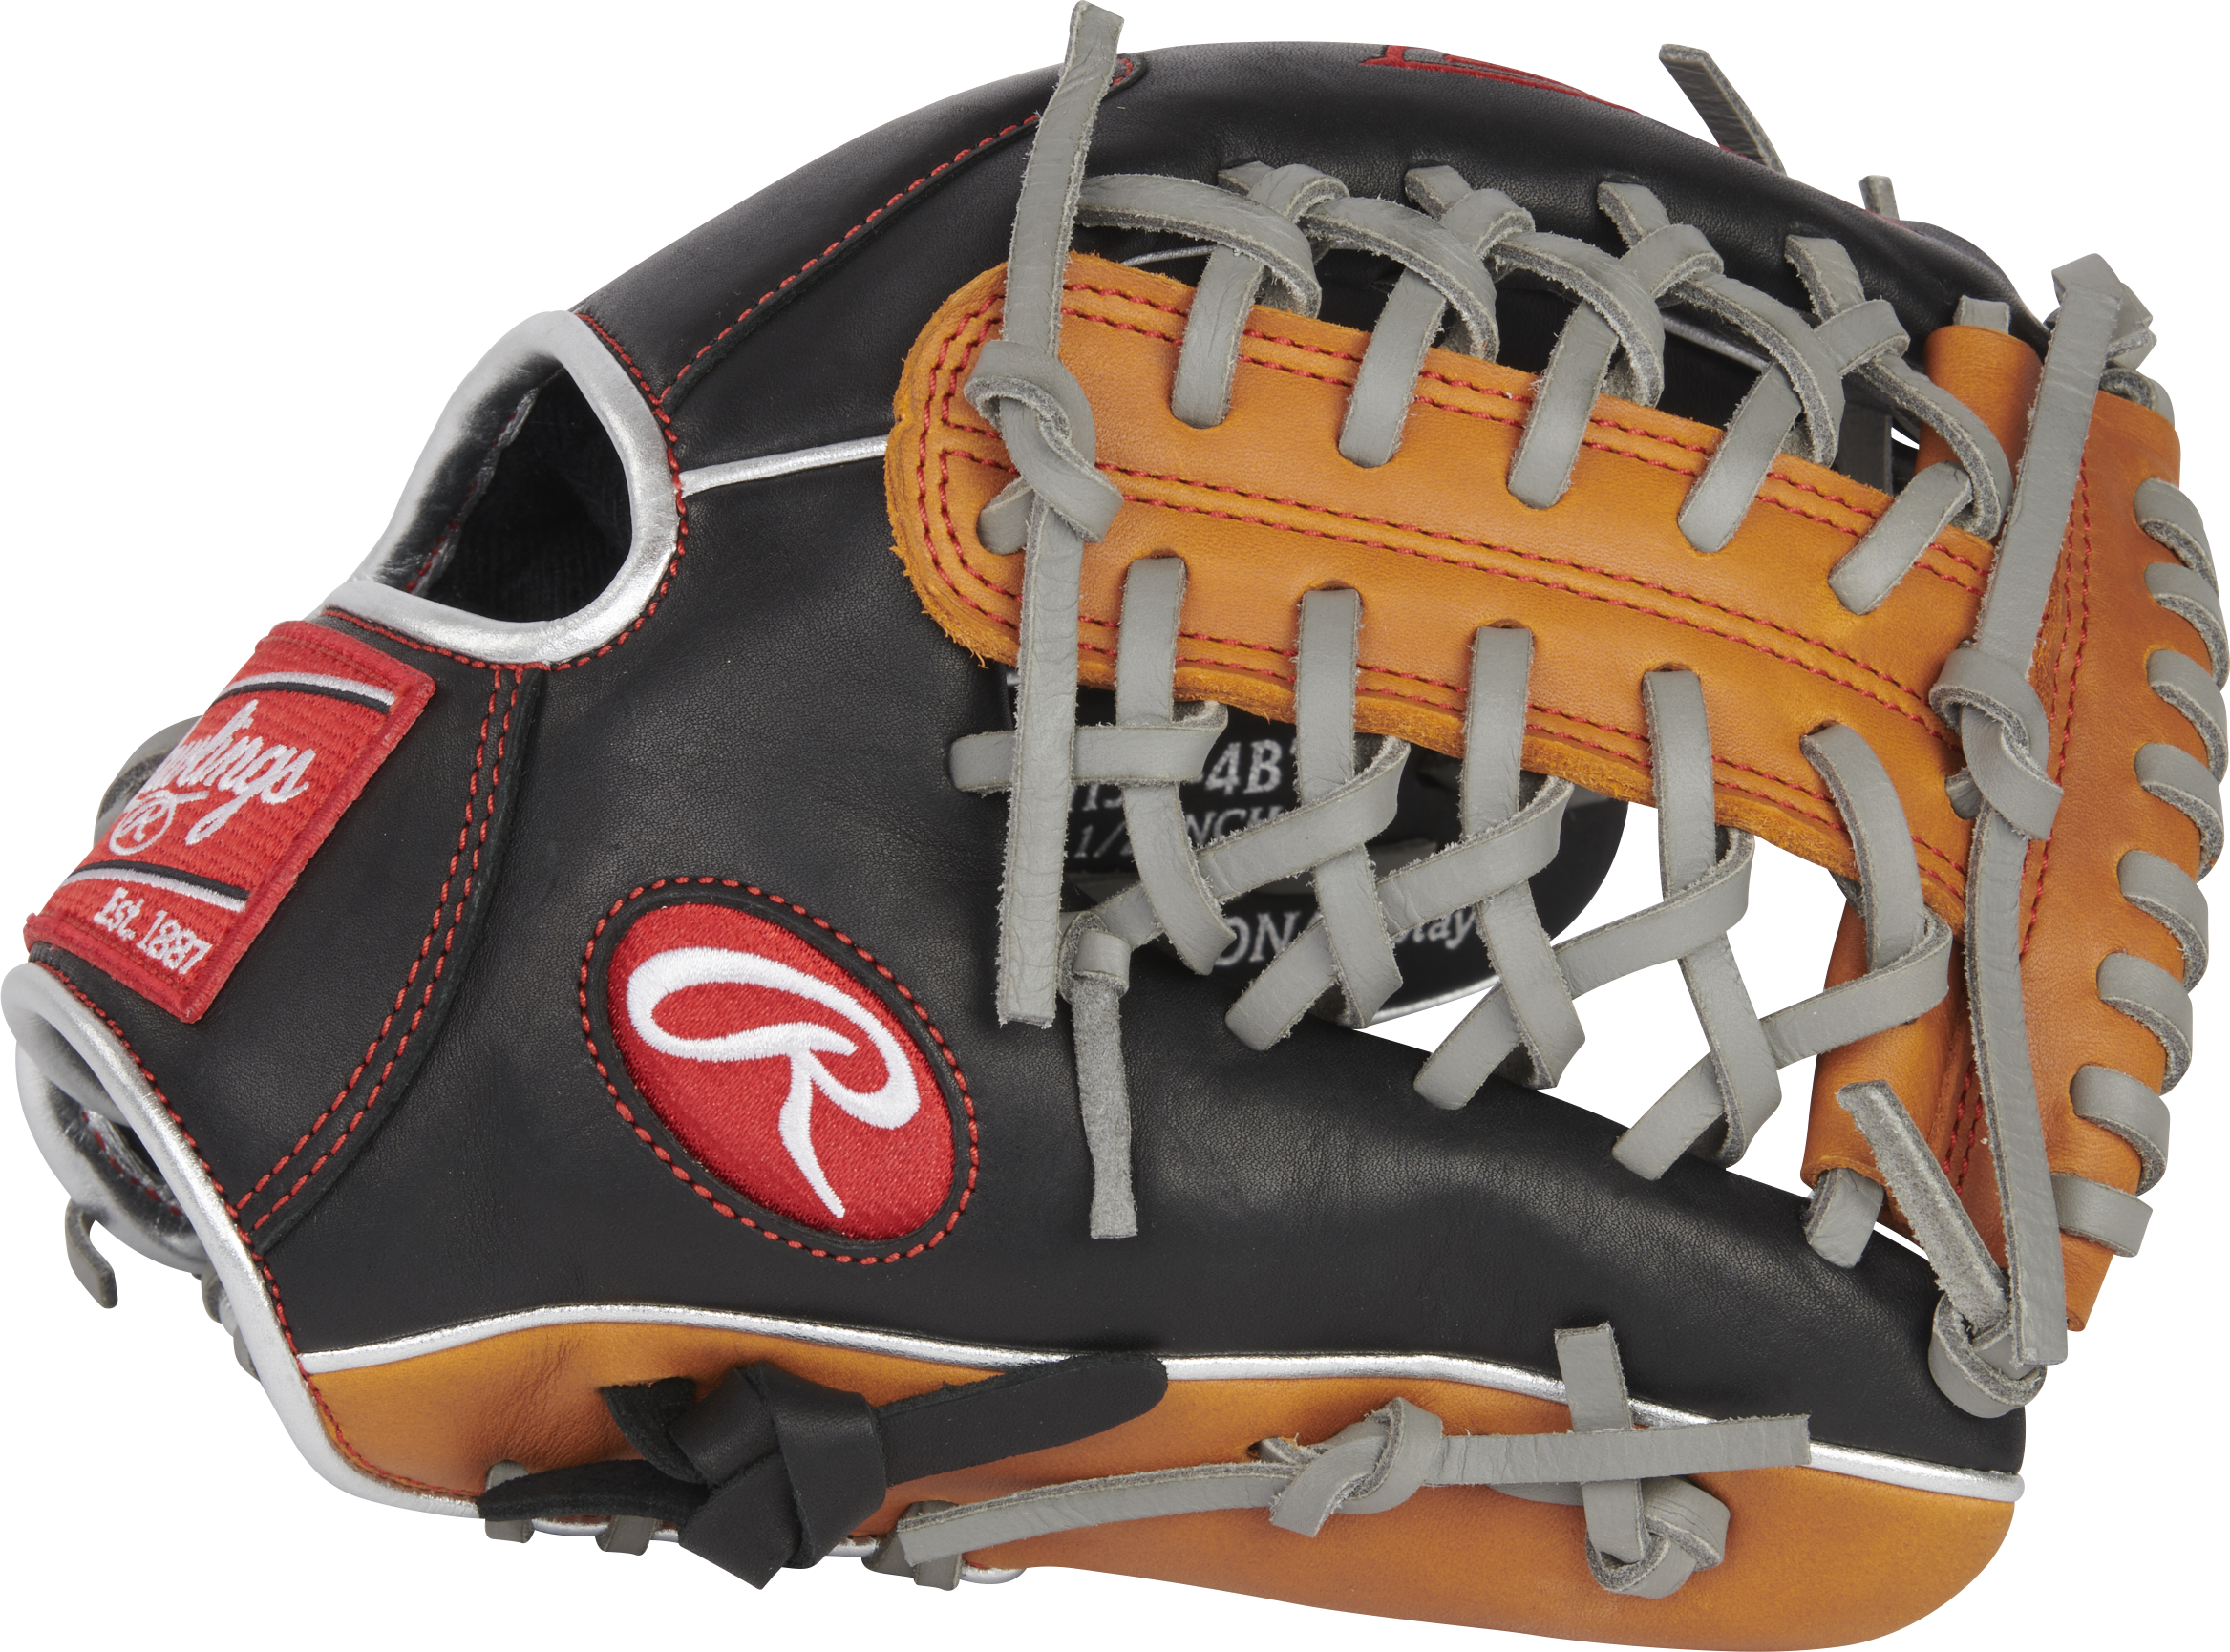 Rawlings R9 Contour 11.5" Baseball Glove